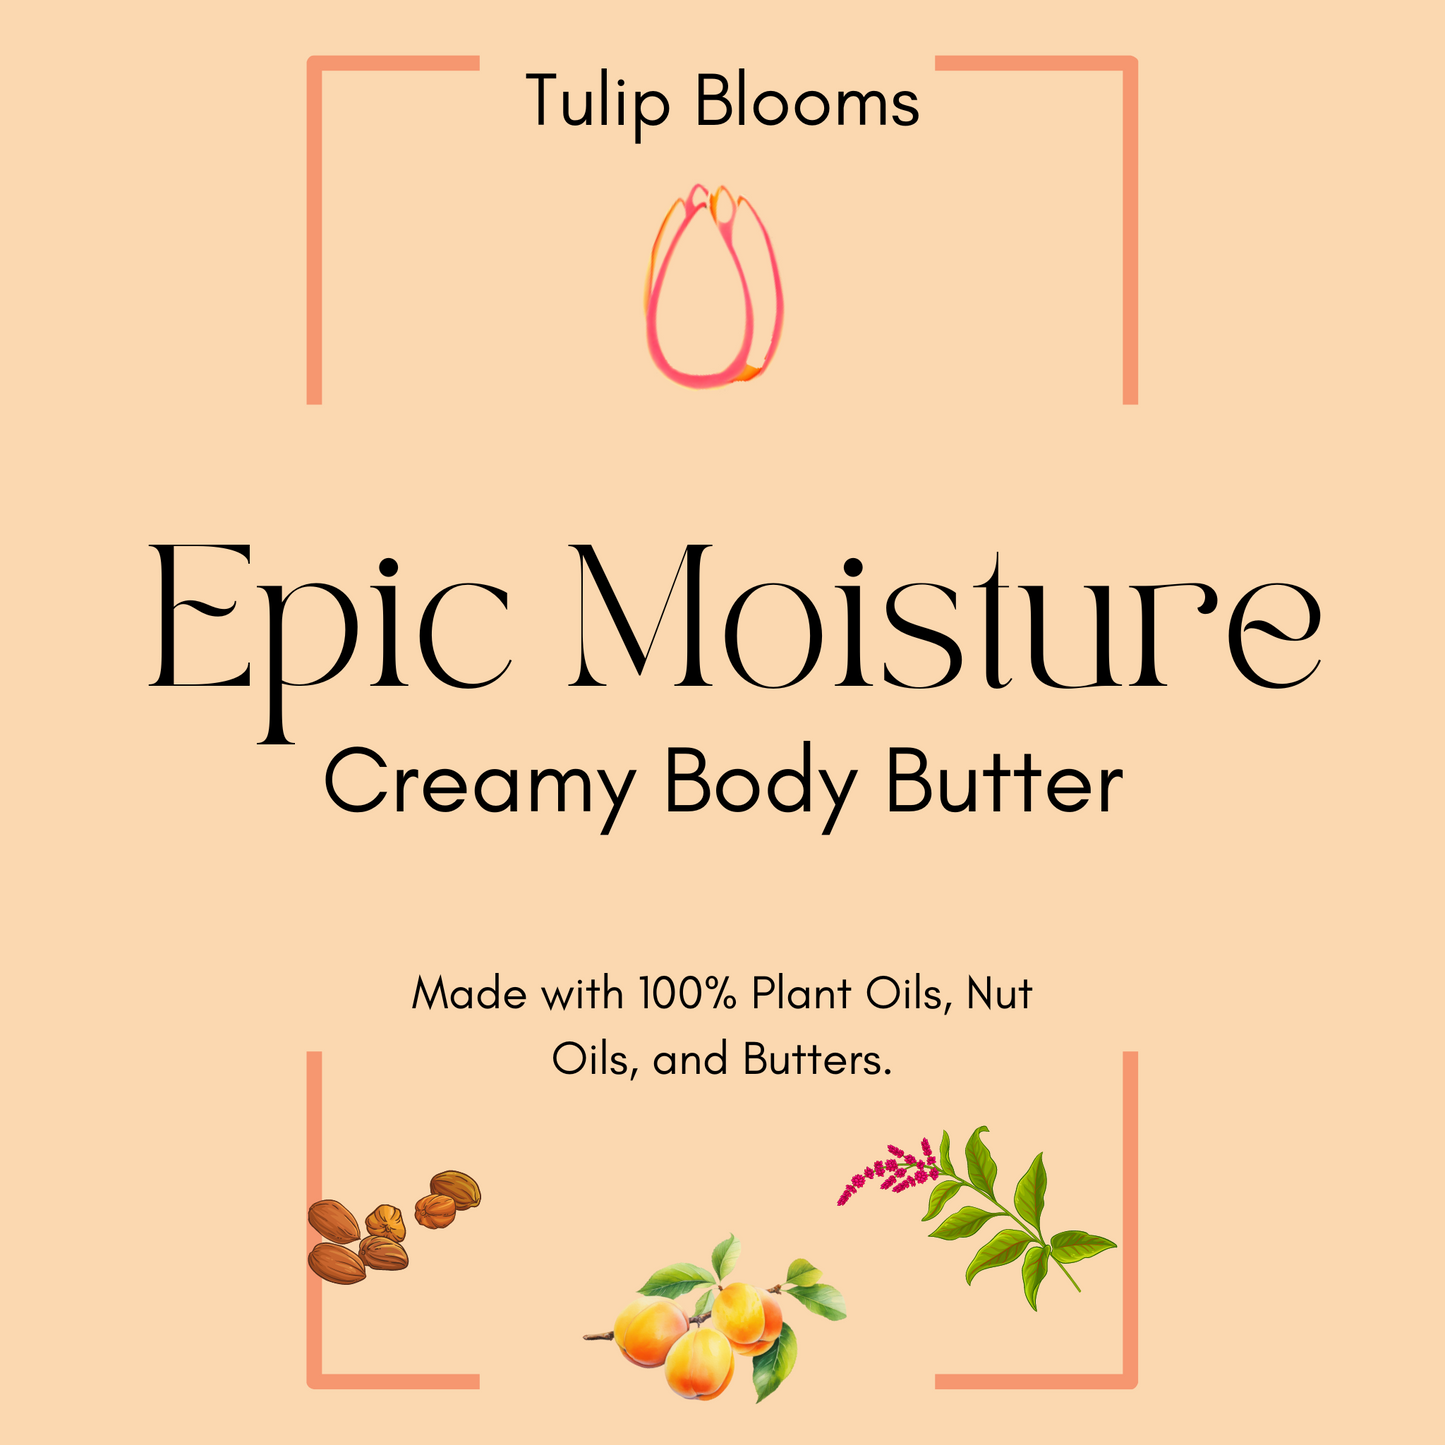 Epic Moisture Creamy Body Butter